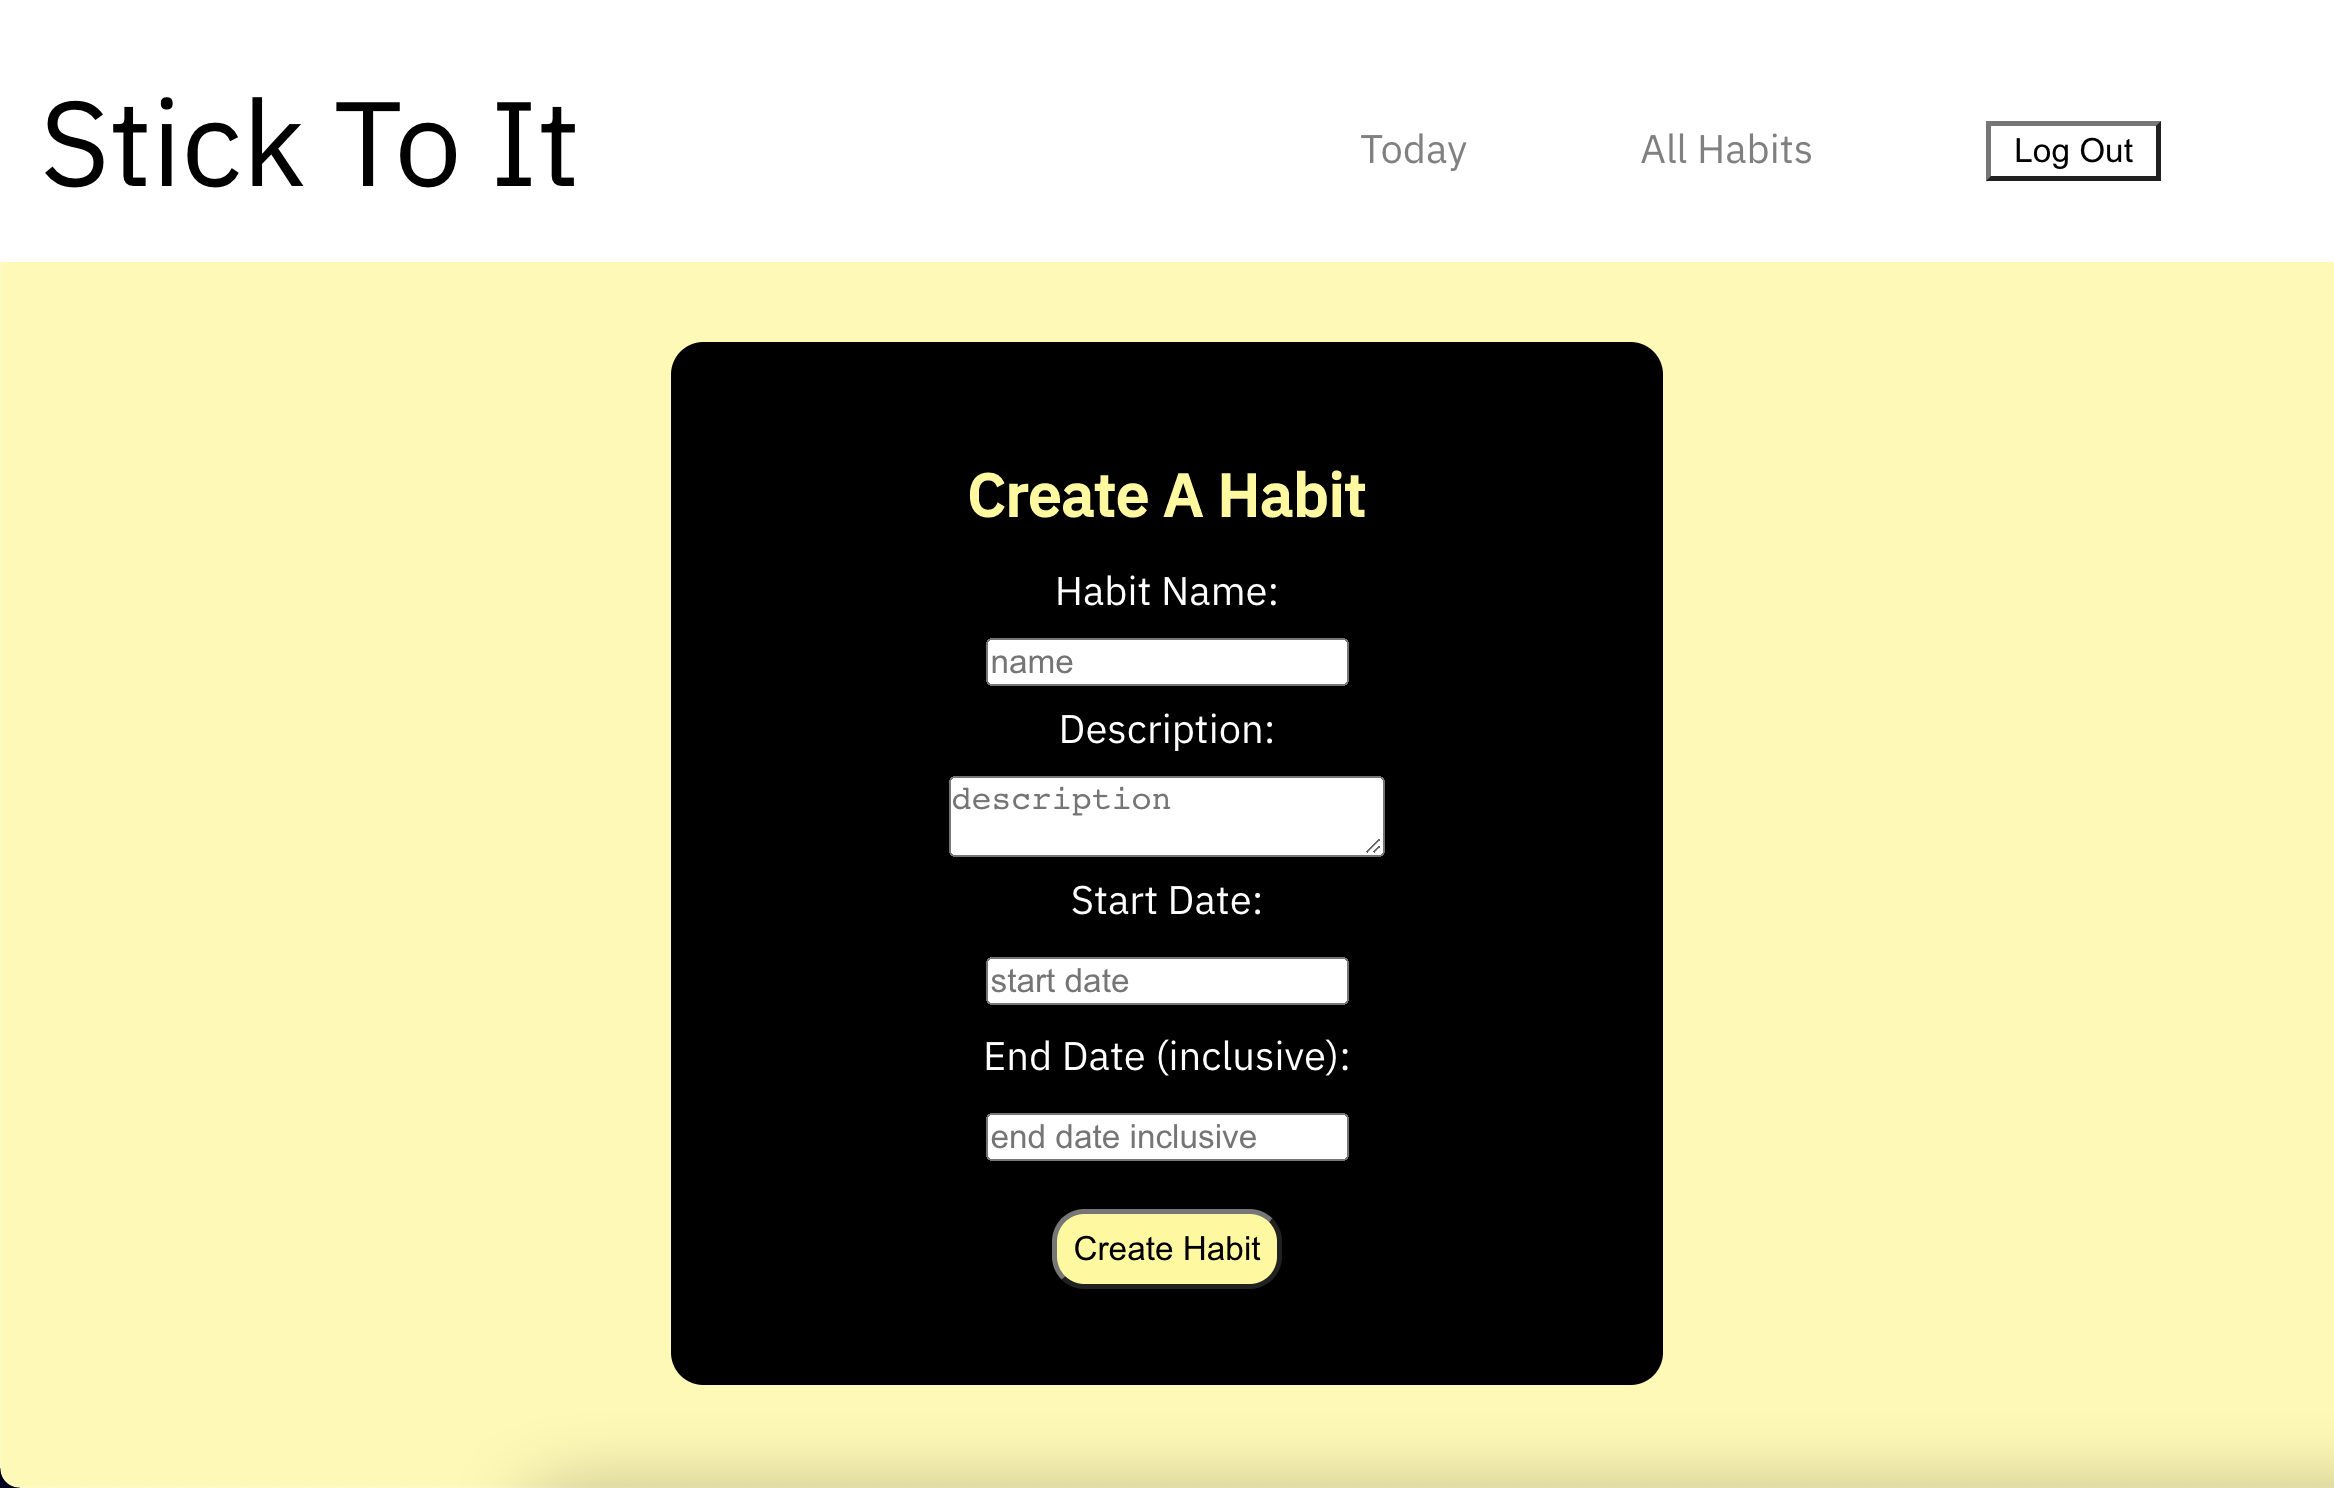 Creating a Habit